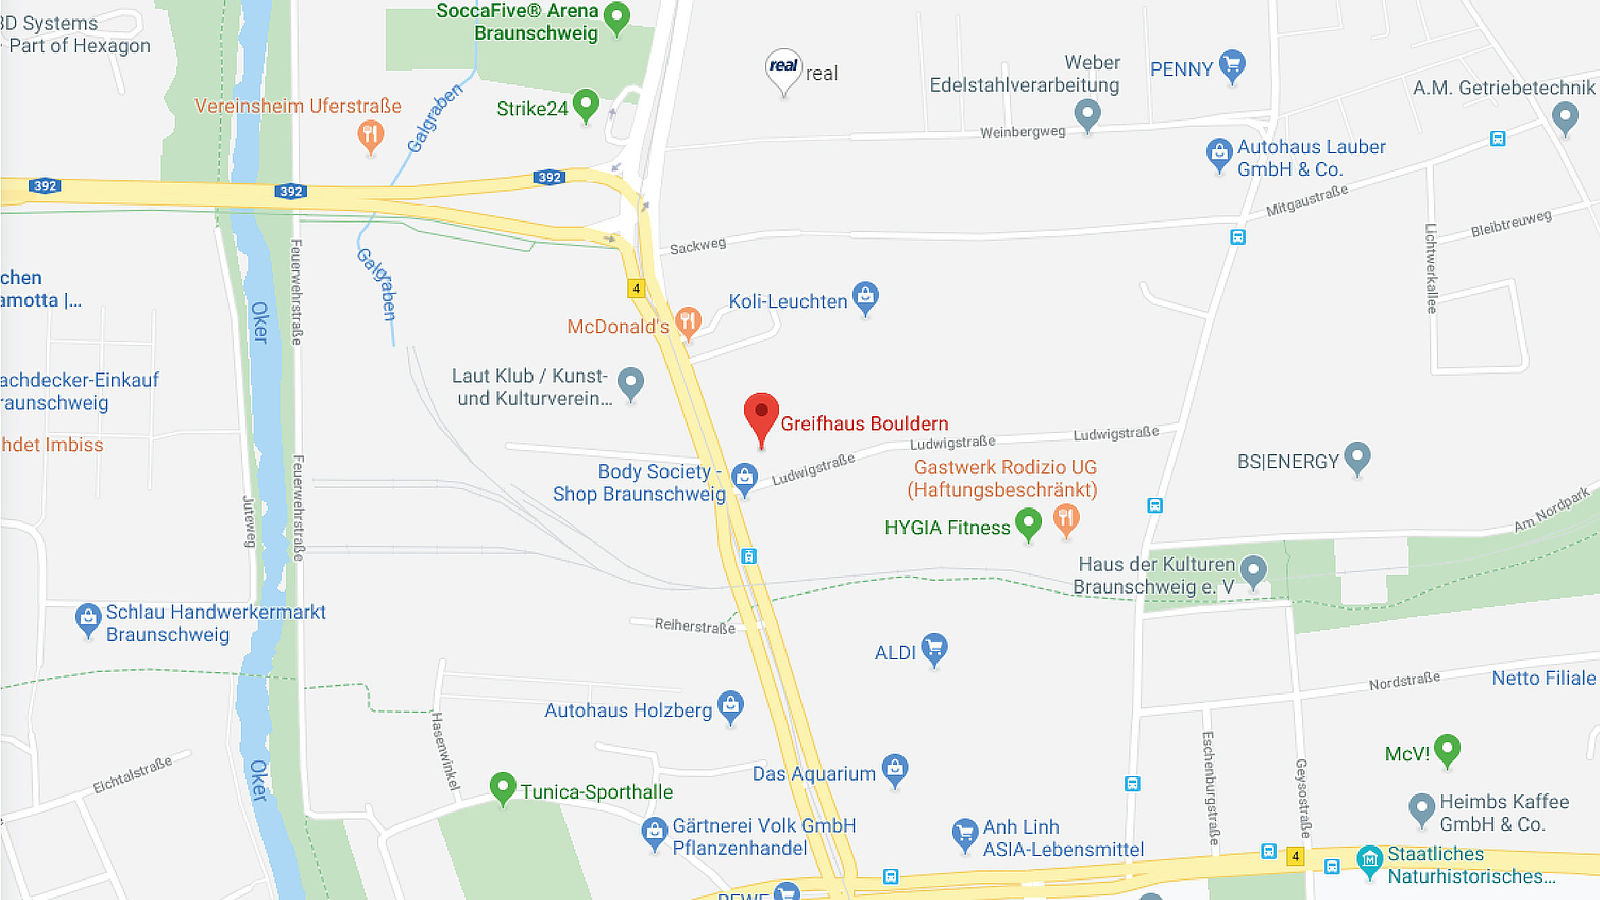 Google Maps Greifhaus